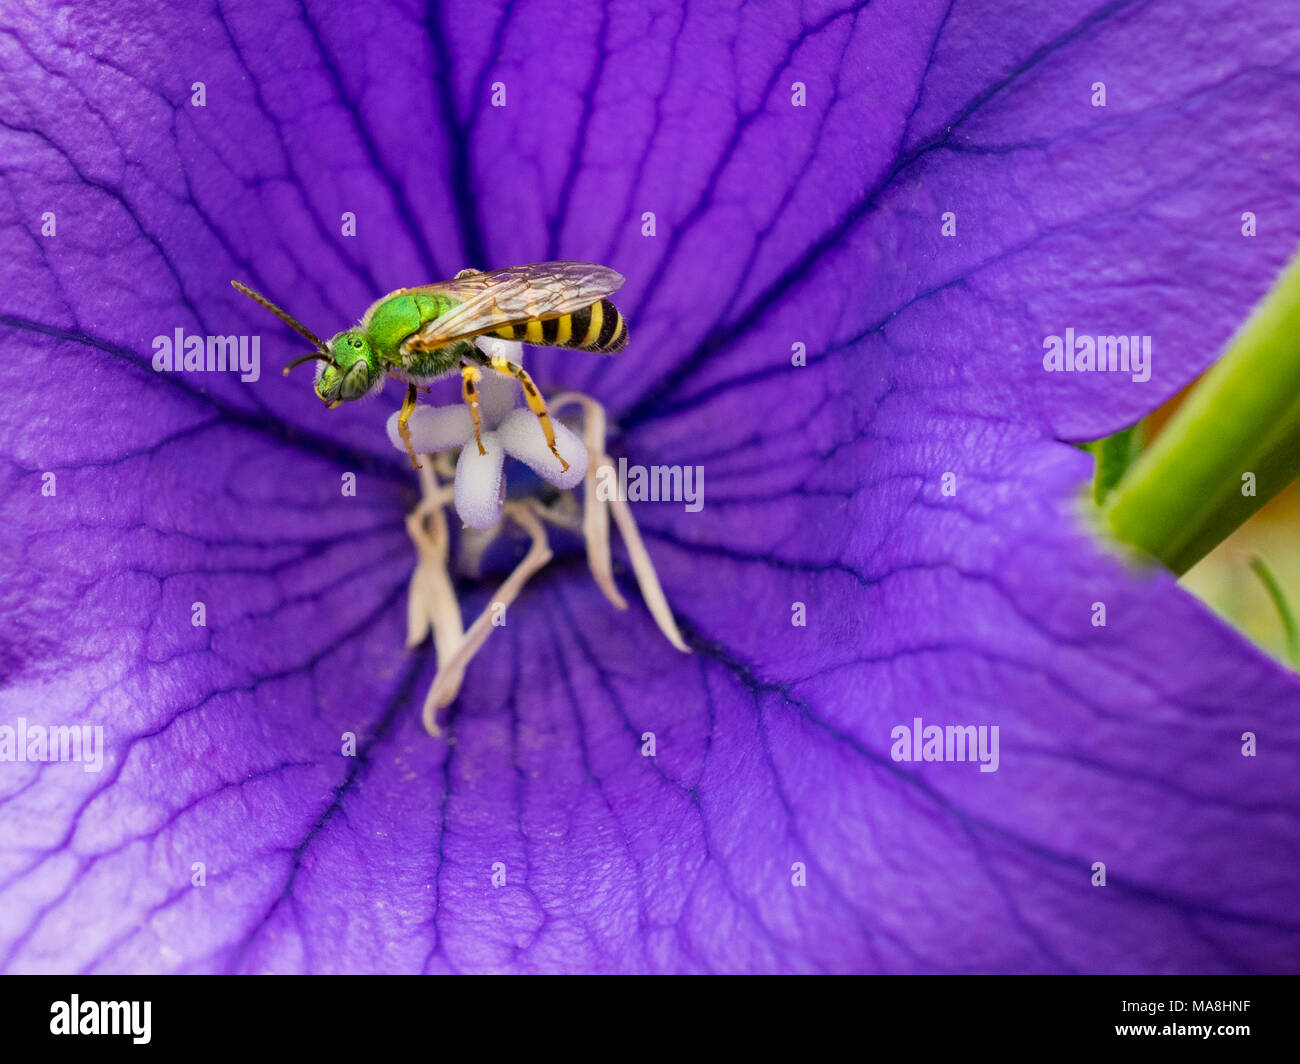 Green bee on purple flower Stock Photo